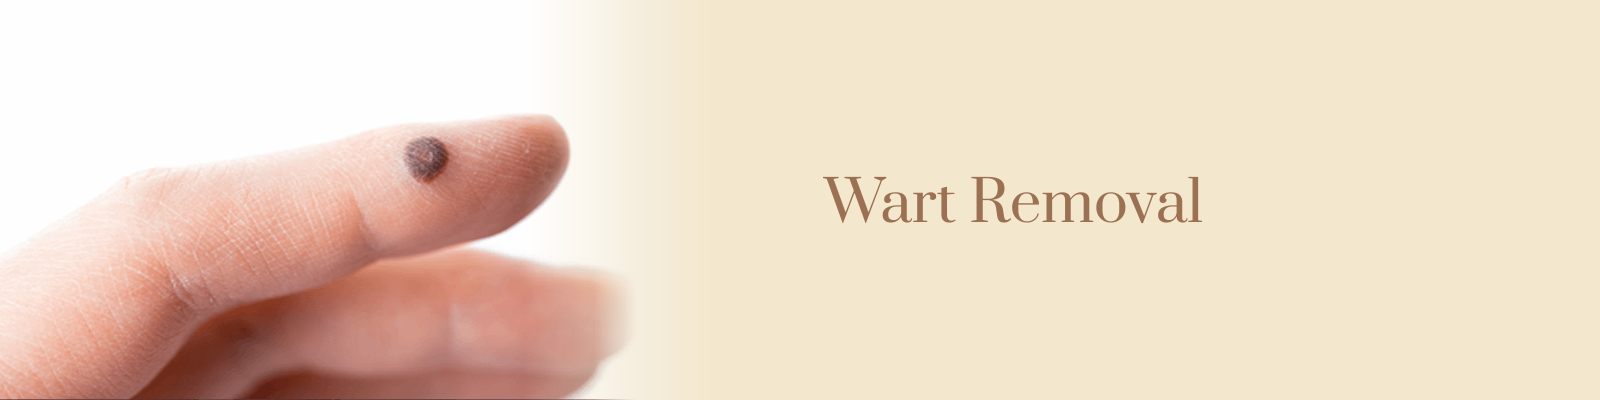 Wart Removal Treatment in Delhi